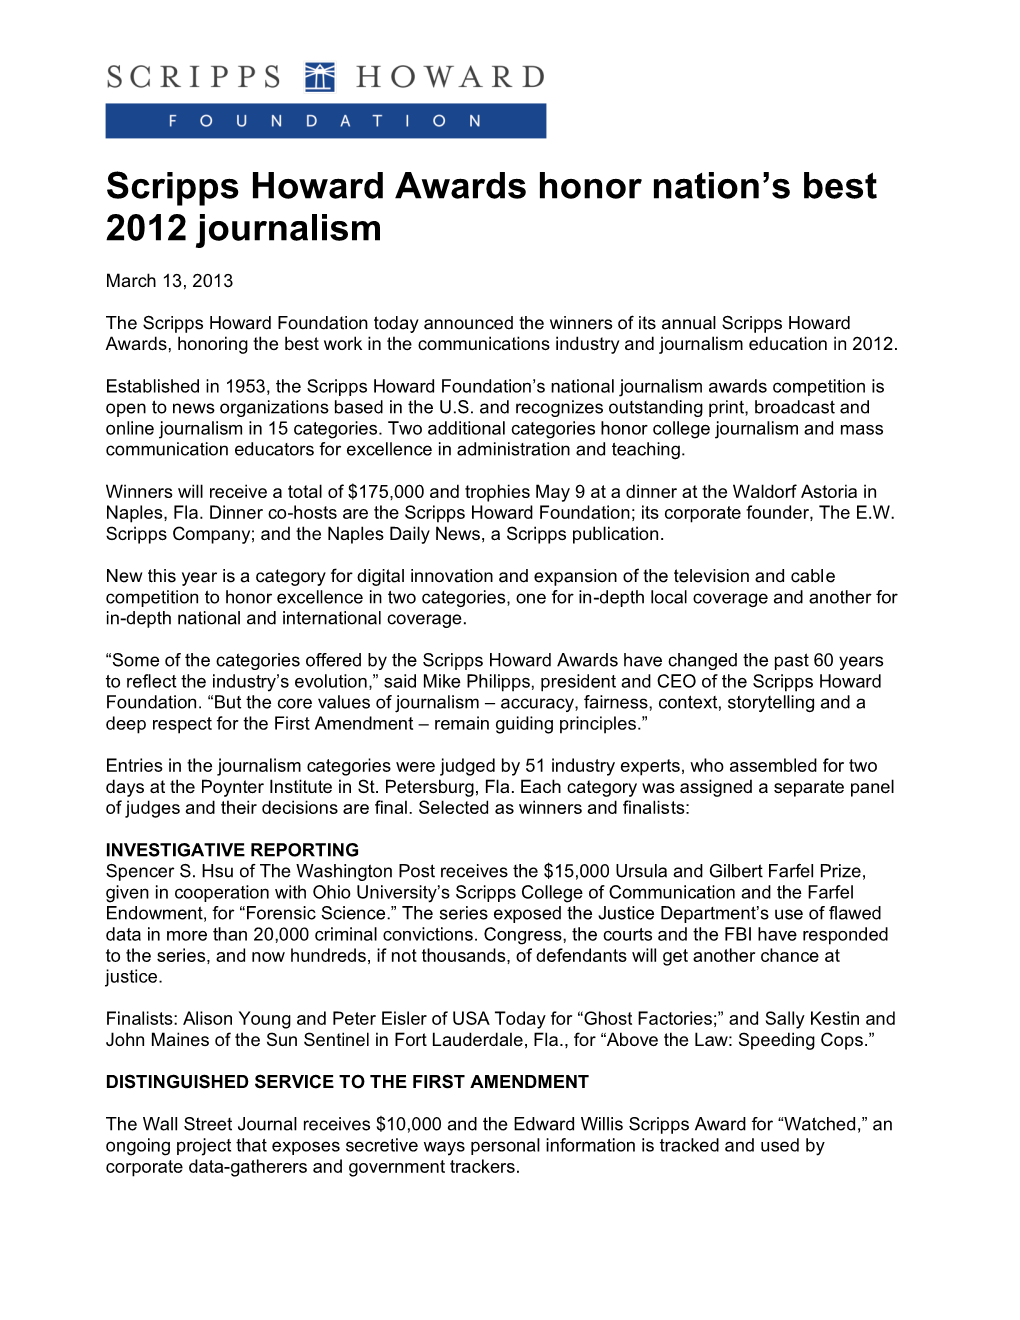 Scripps Howard Awards Honor Nation's Best 2012 Journalism